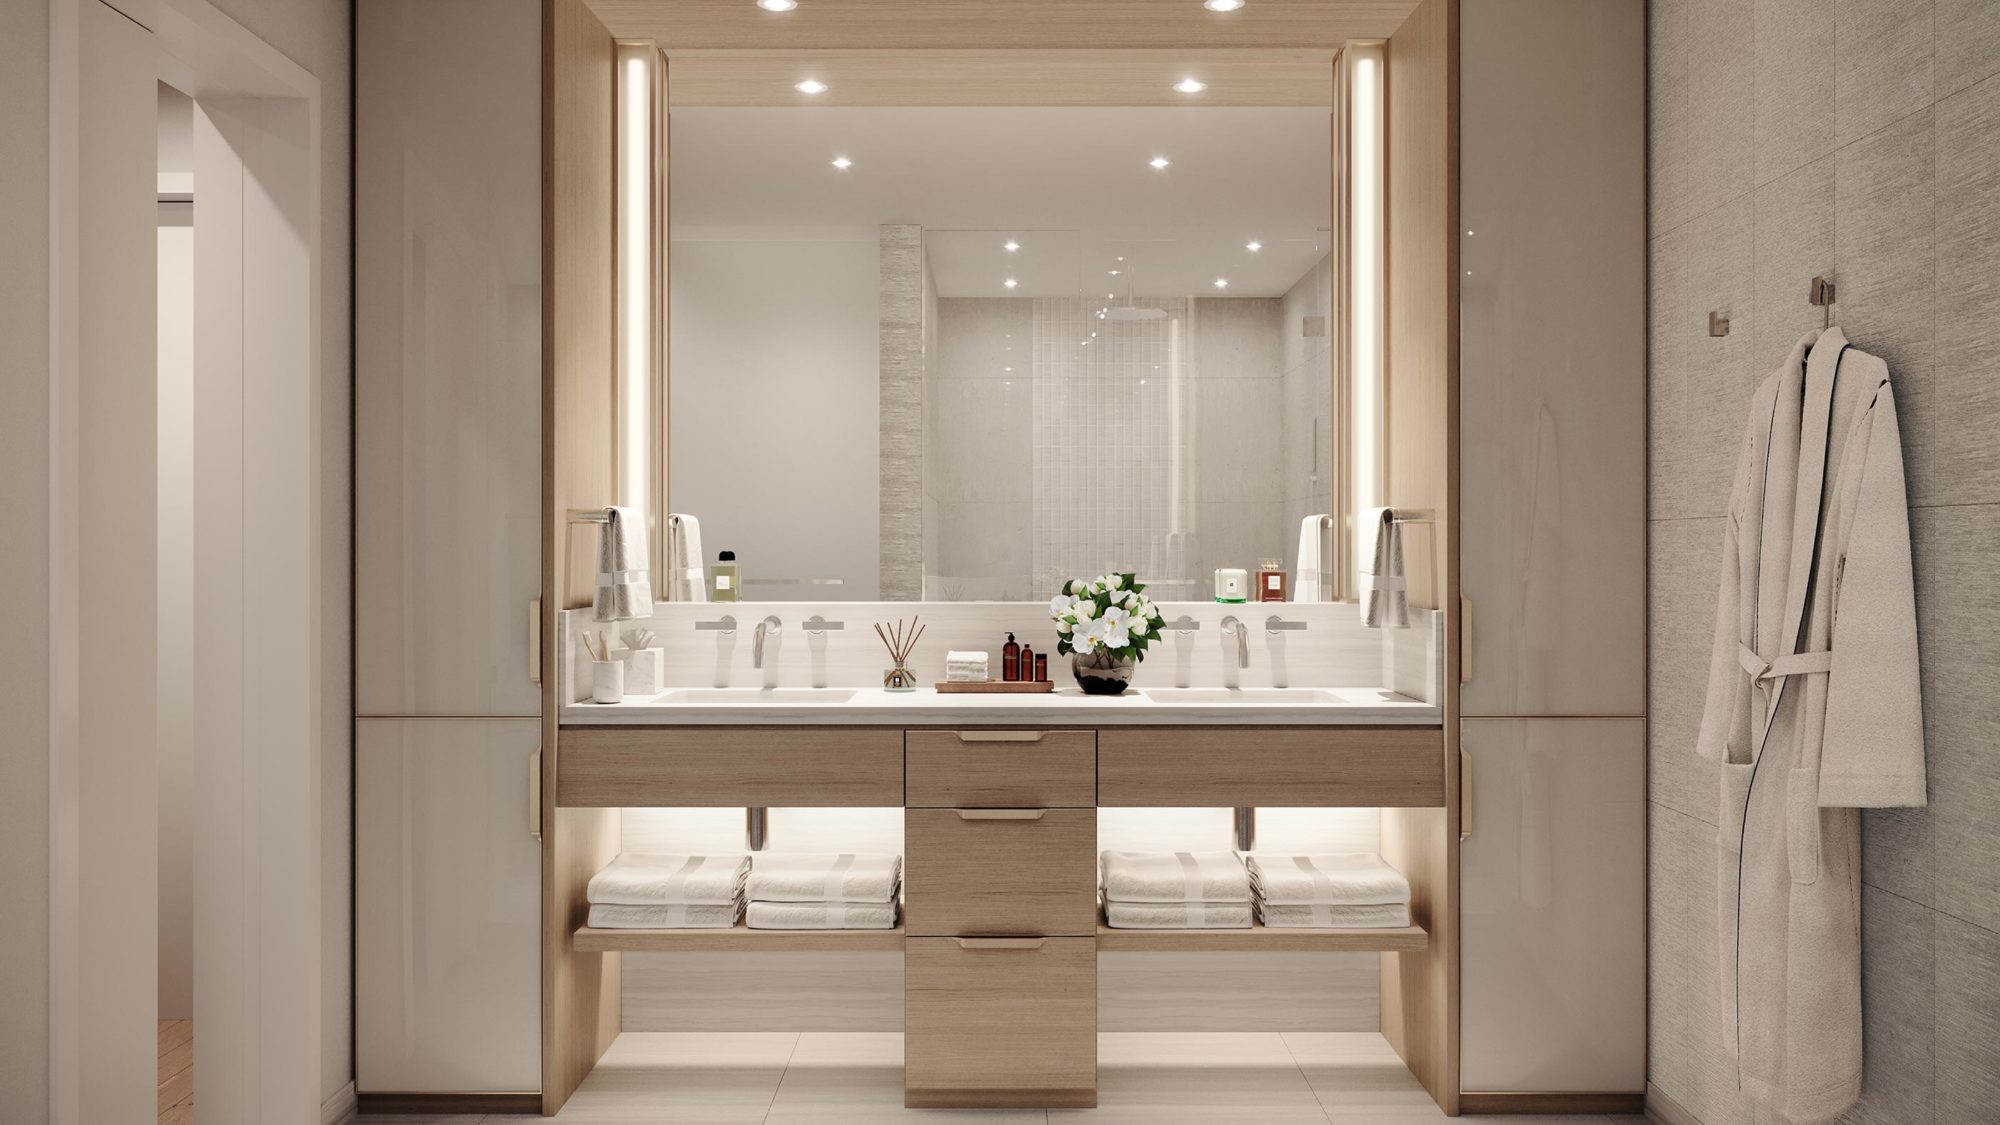 Primary bathroom vanity with double sinks